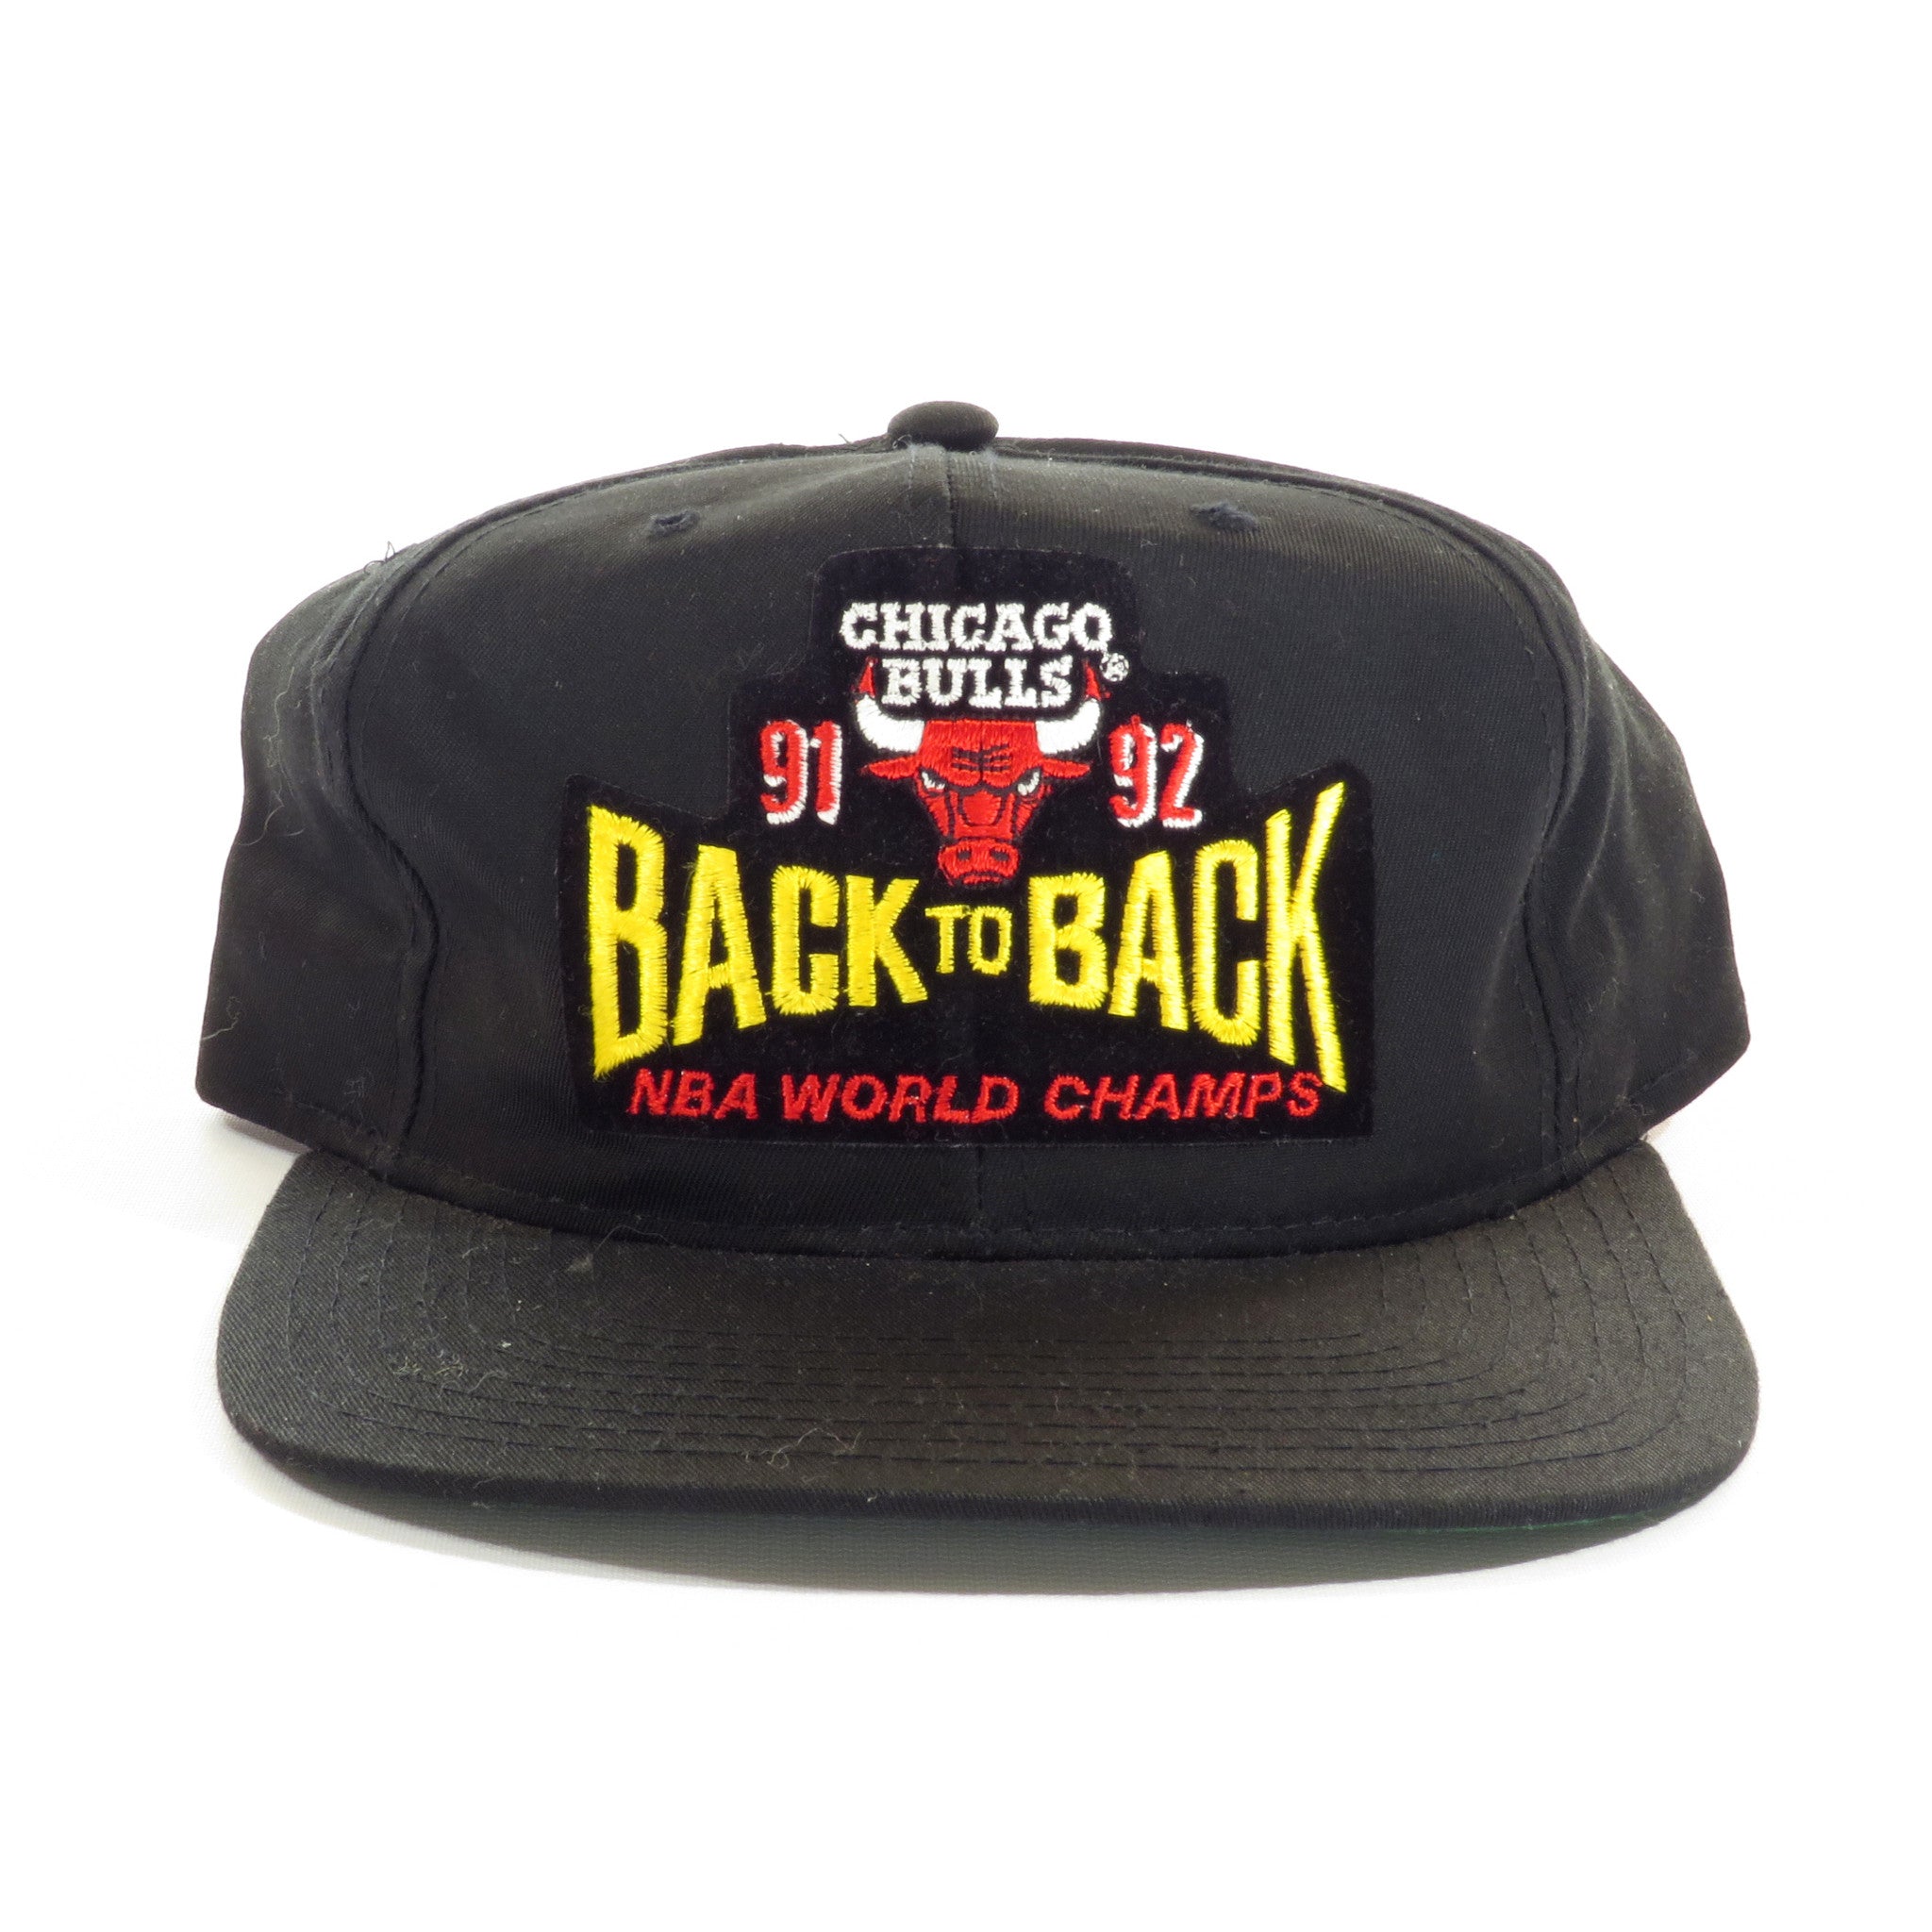 Chicago Bulls Back to Back NBA Champions Snapback Hat